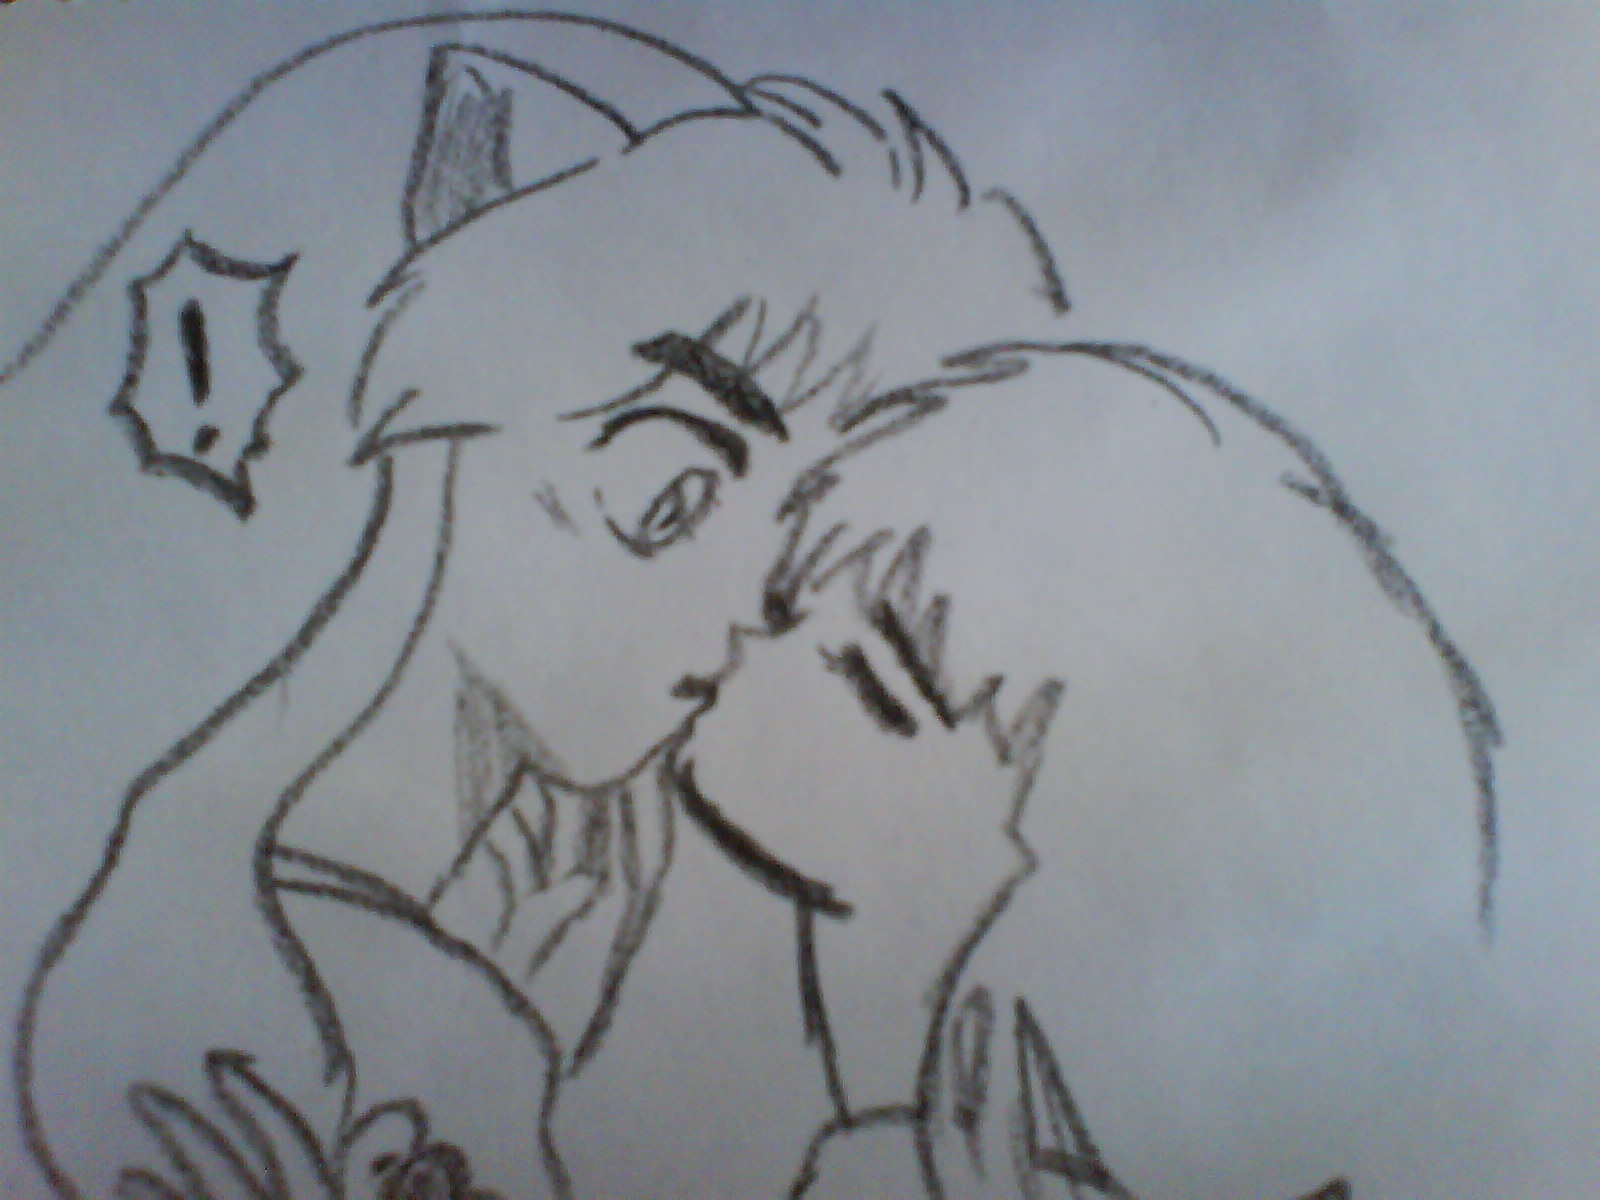 Inuyasha surprise kiss by xaleMaiKomodo